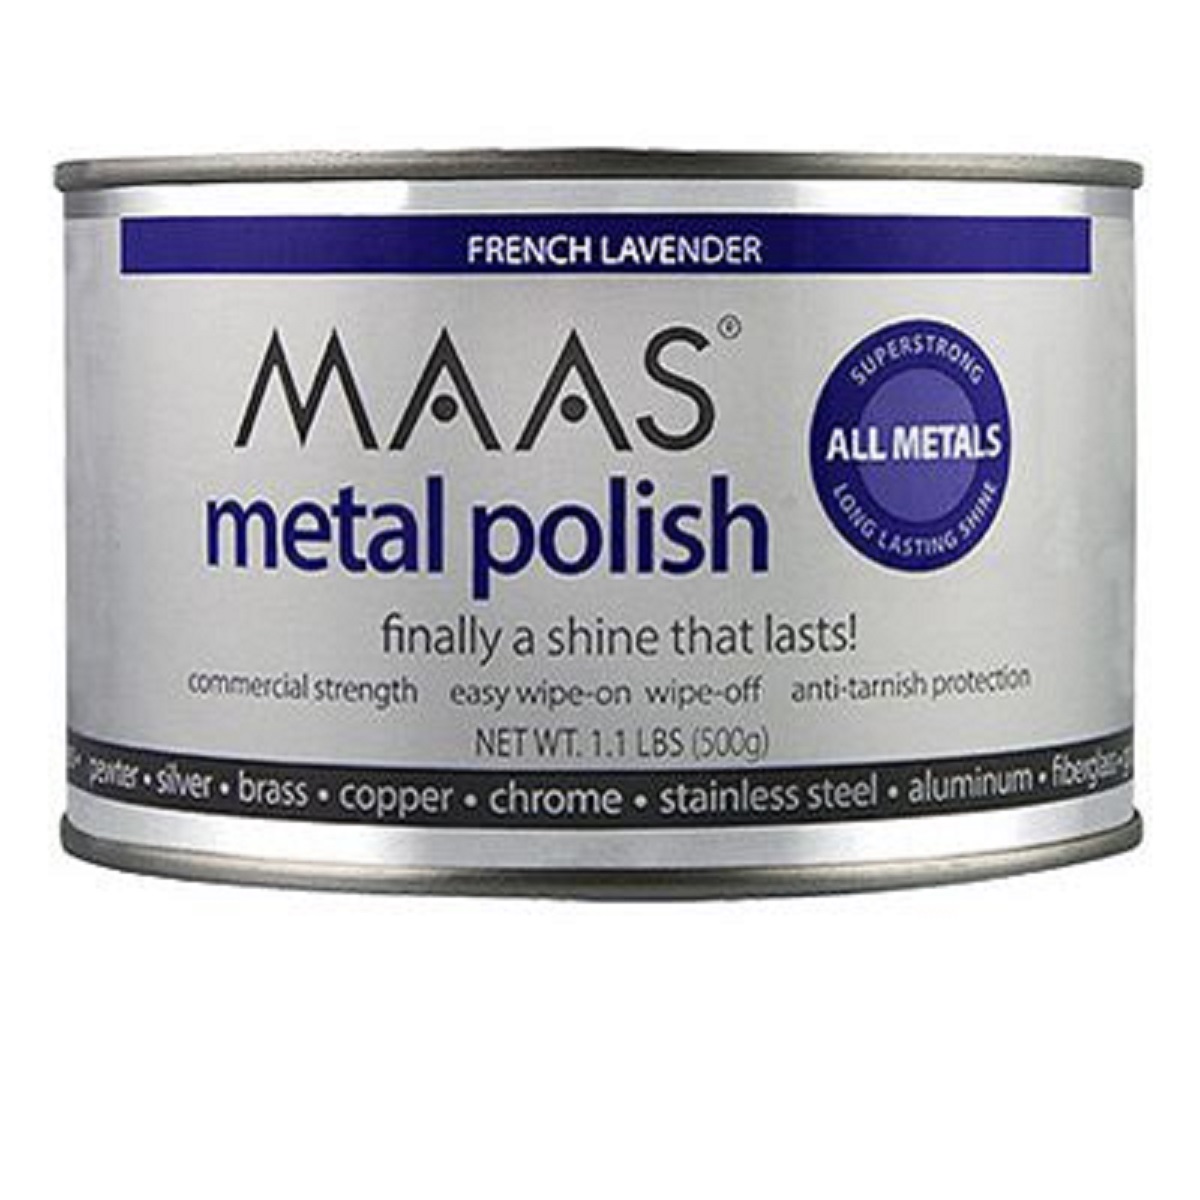 MAAS Metal Polish 1.1 lb Can